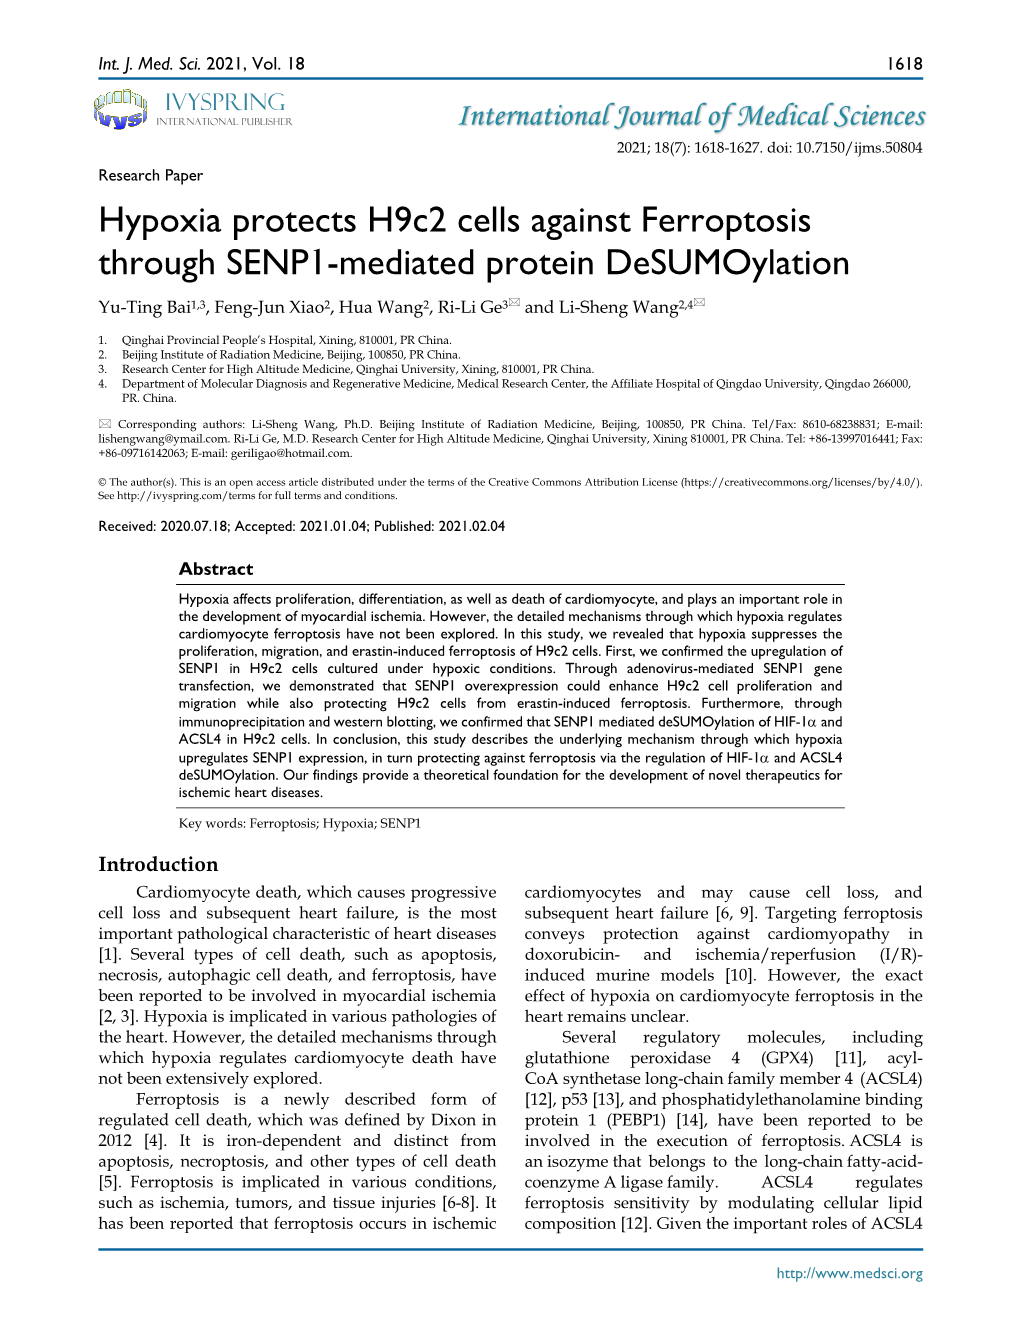 Hypoxia Protects H9c2 Cells Against Ferroptosis Through SENP1-Mediated Protein Desumoylation